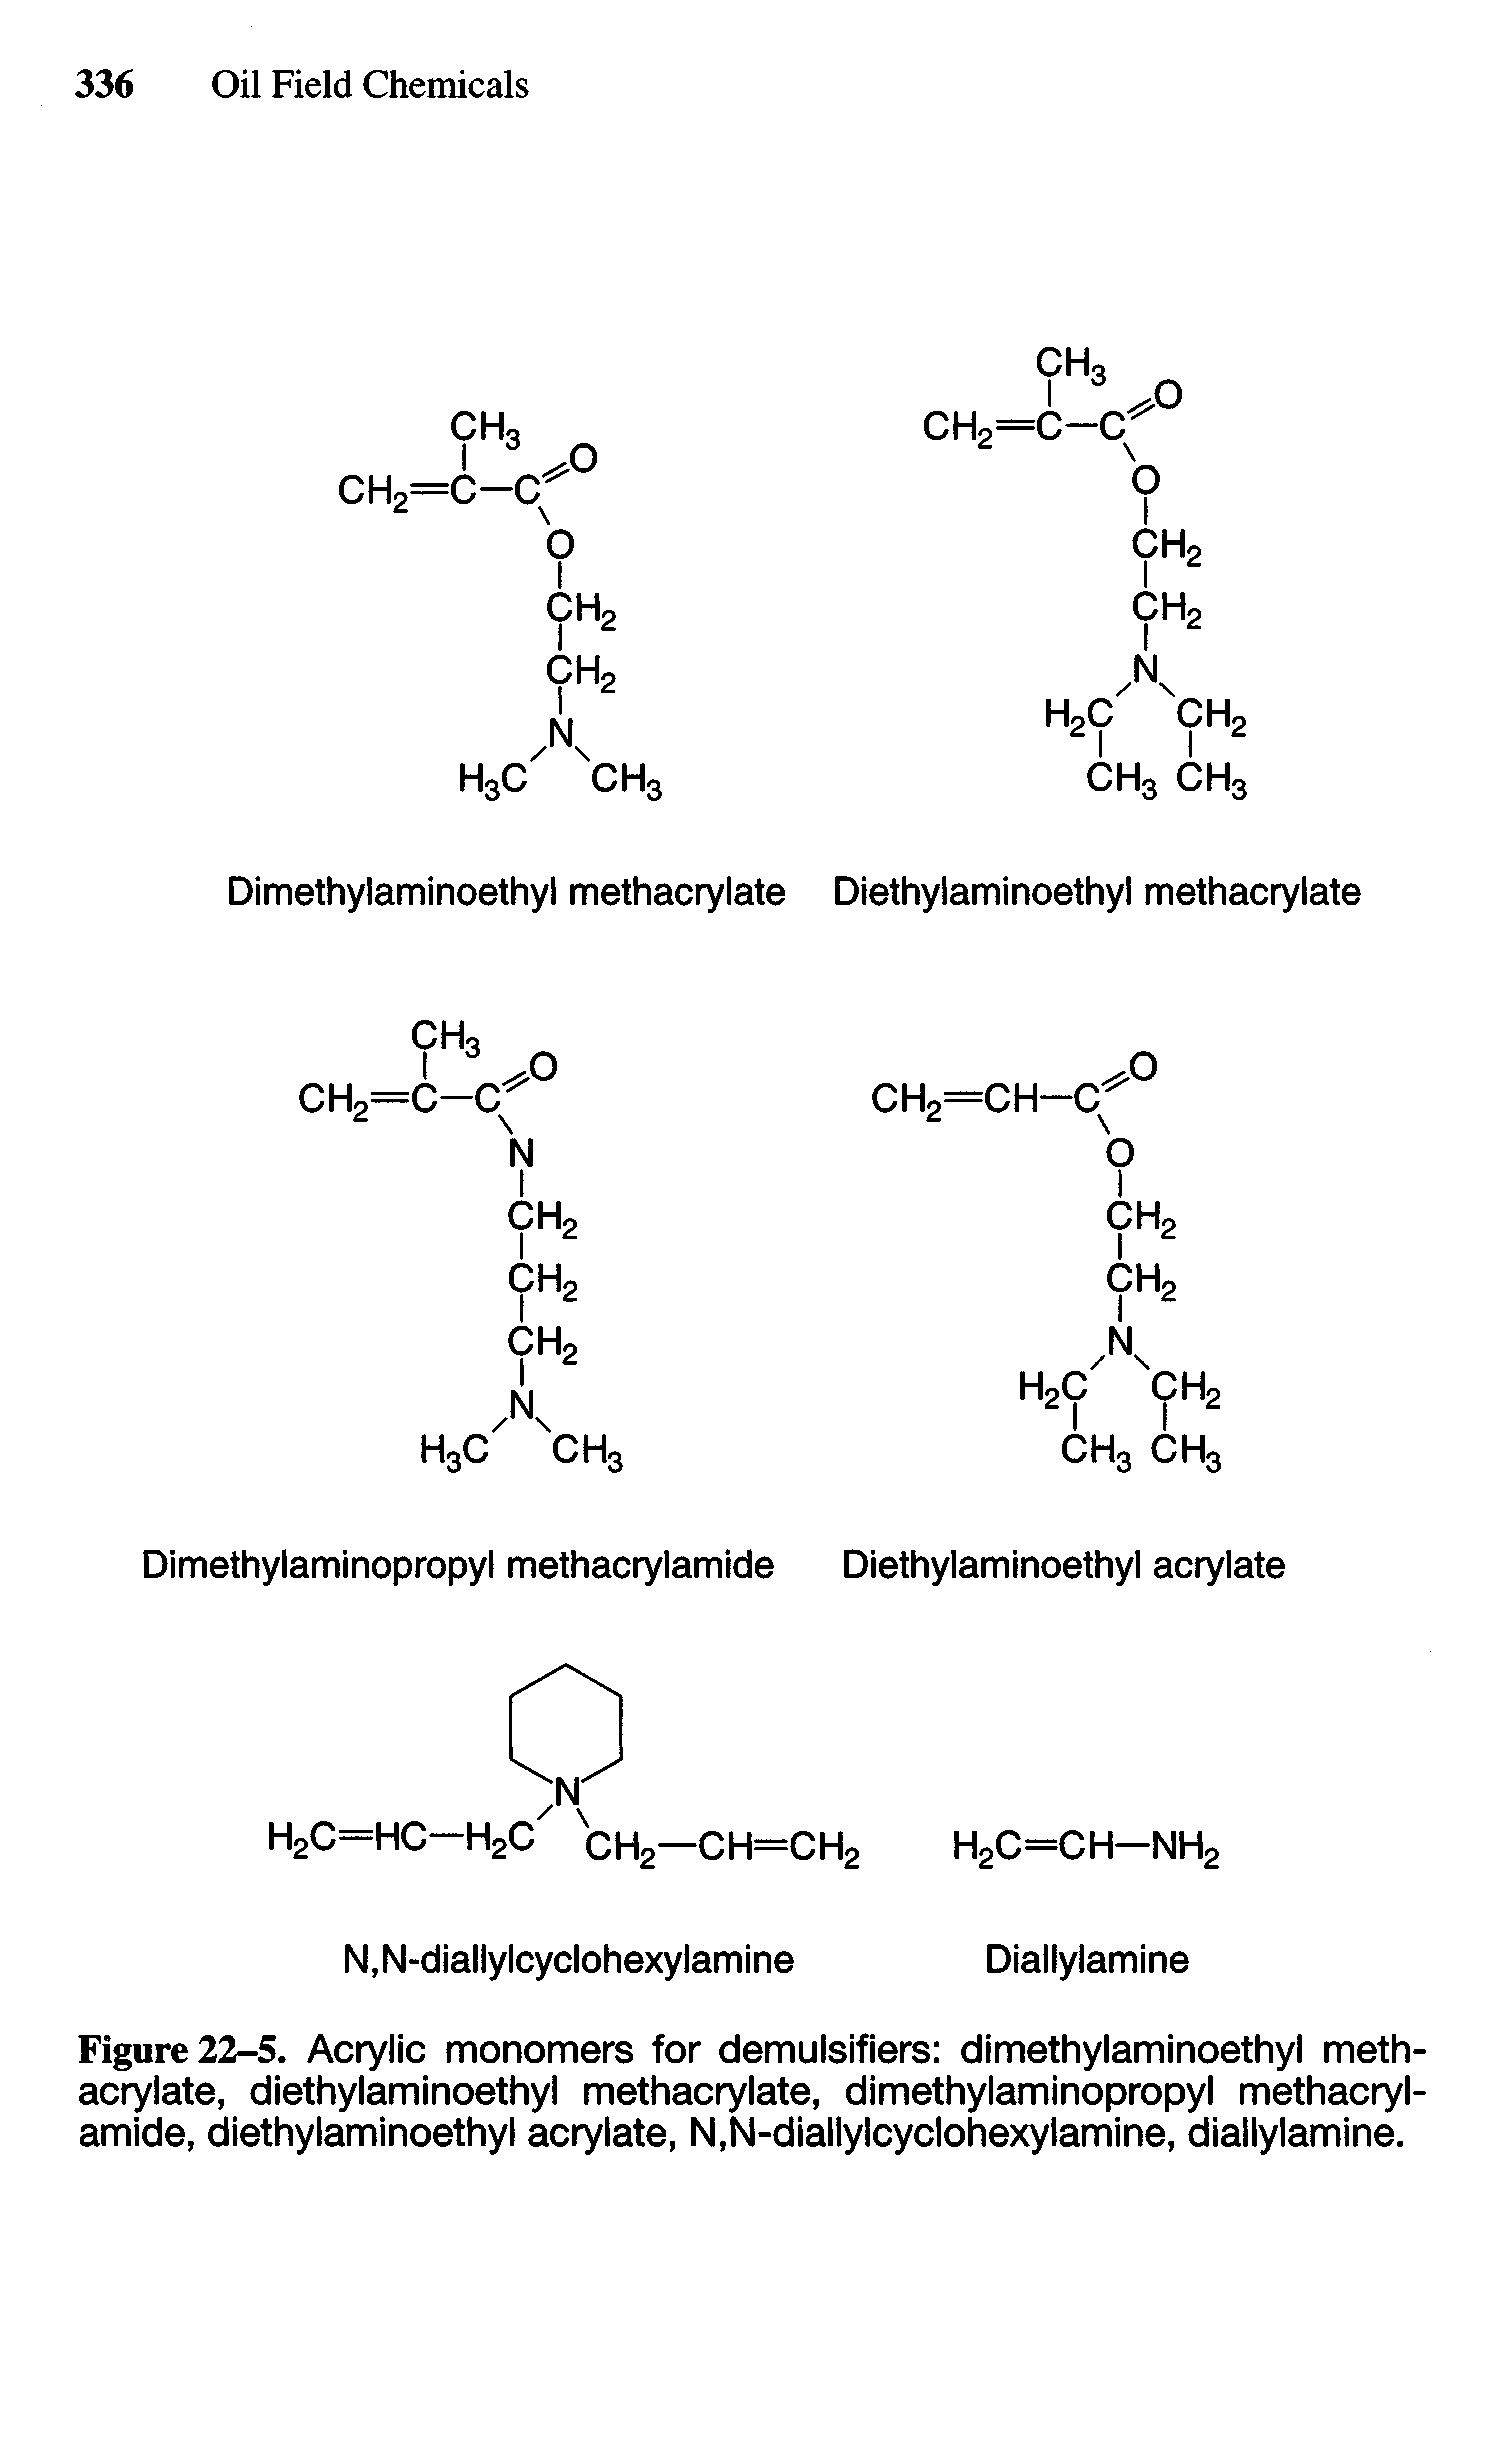 Figure 22-5. Acrylic monomers for demulsifiers dimethylaminoethyl methacrylate, diethylaminoethyl methacrylate, dimethylaminopropyl methacrylamide, diethylaminoethyl acrylate, N,N-diallylcyclohexylamine, diallylamine.